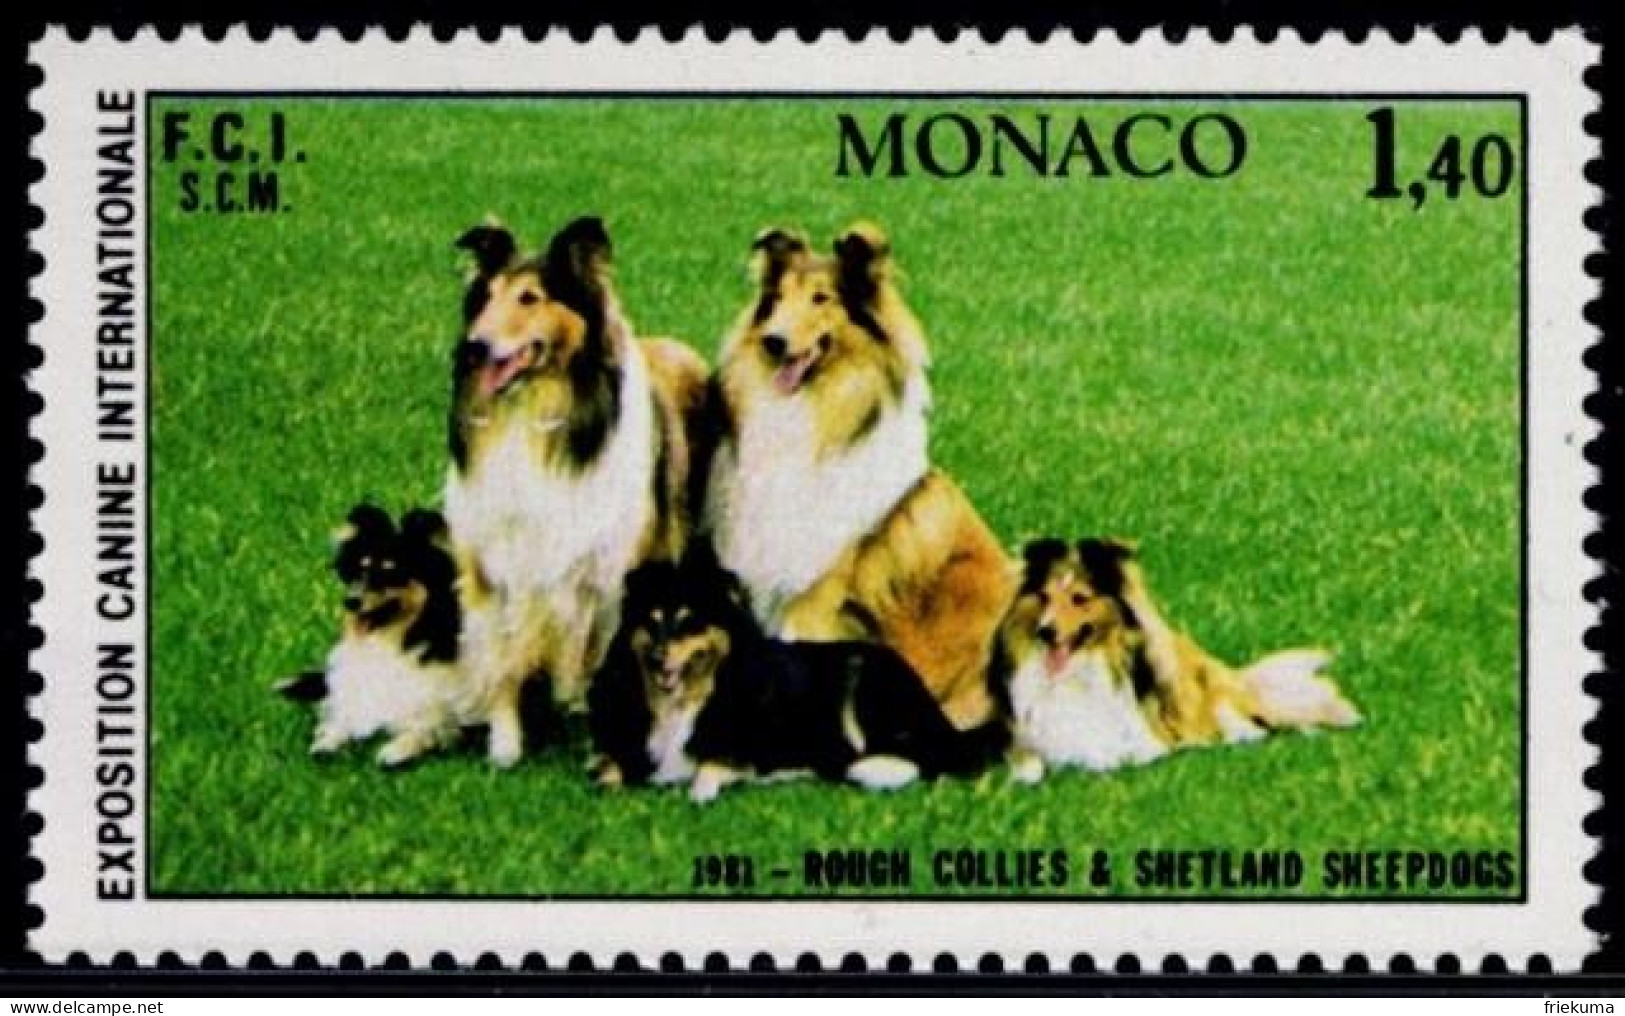 Monaco 1981, International Dog Show, Monte Carlo: Collies Et Bergers Shetland/Collies And Shetland Sheepdogs, MiNr. 1480 - Dogs